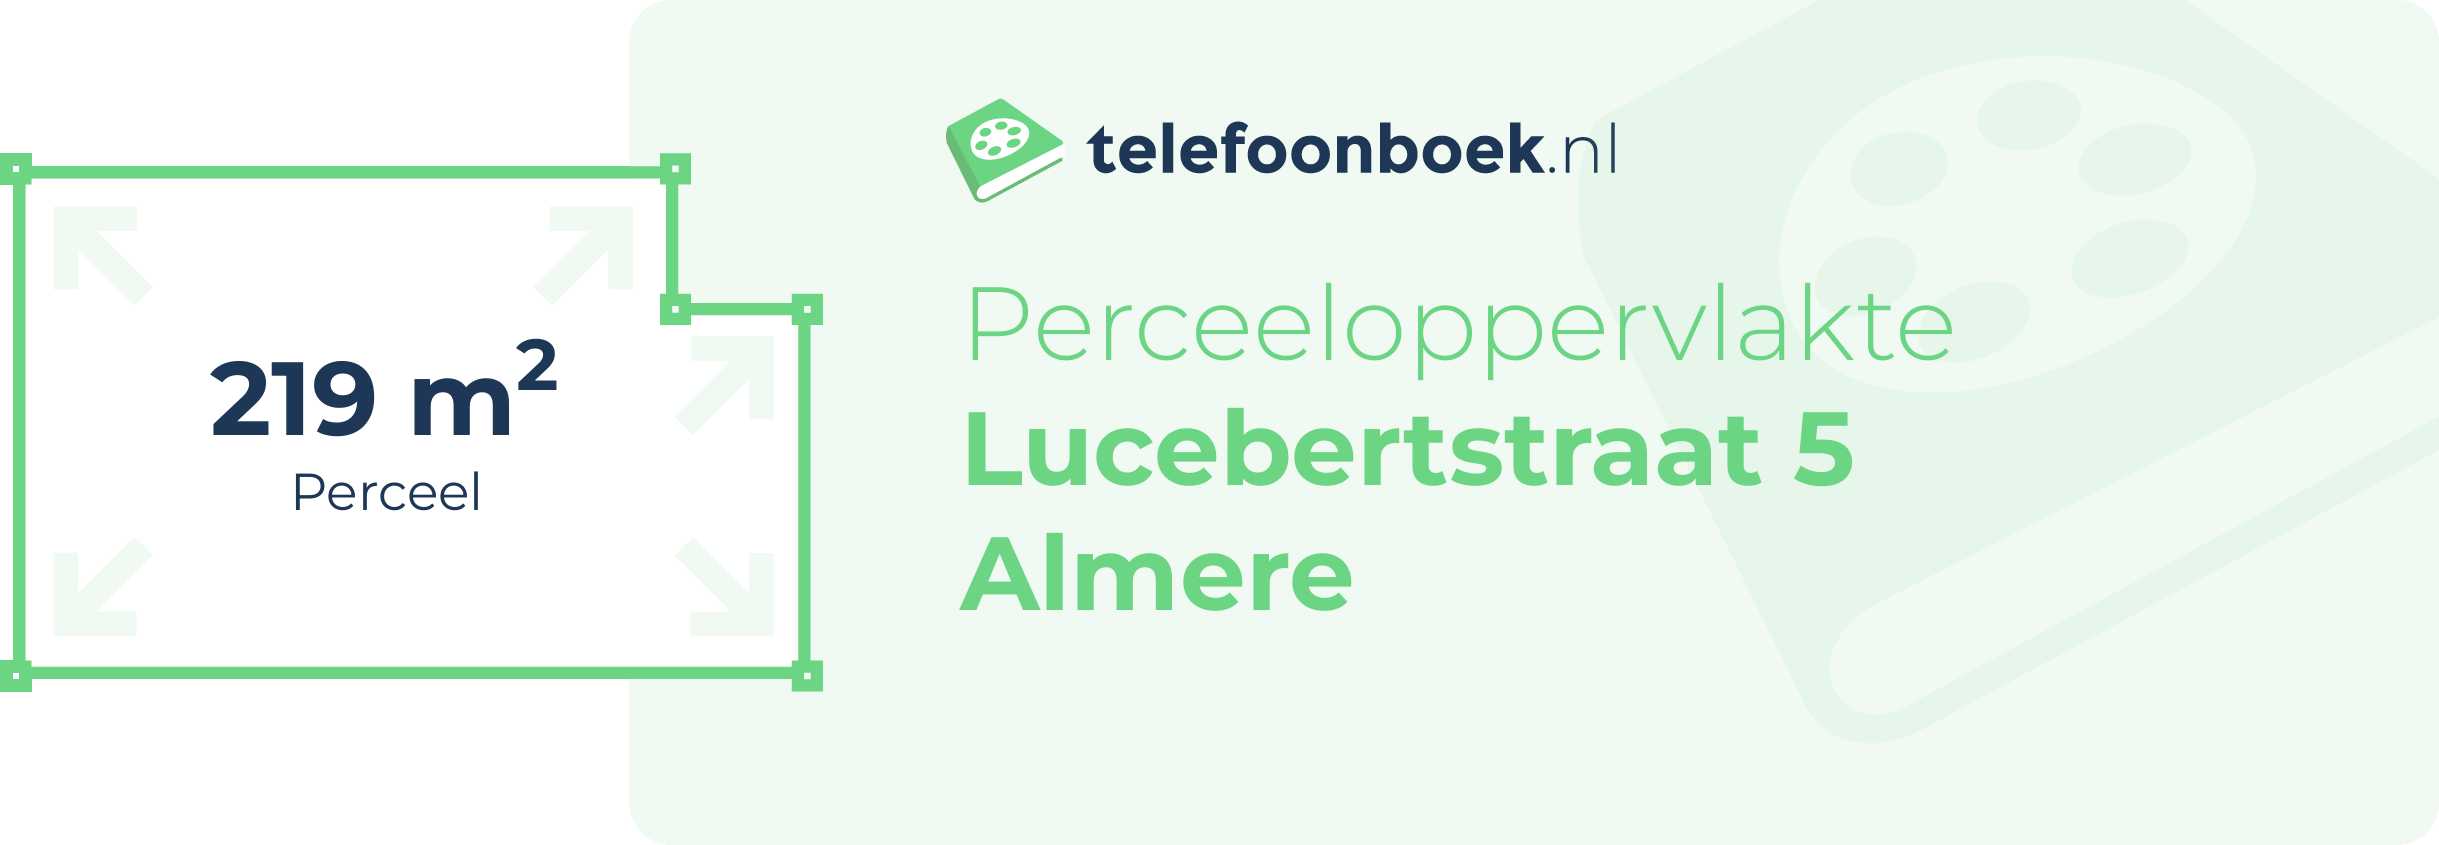 Perceeloppervlakte Lucebertstraat 5 Almere